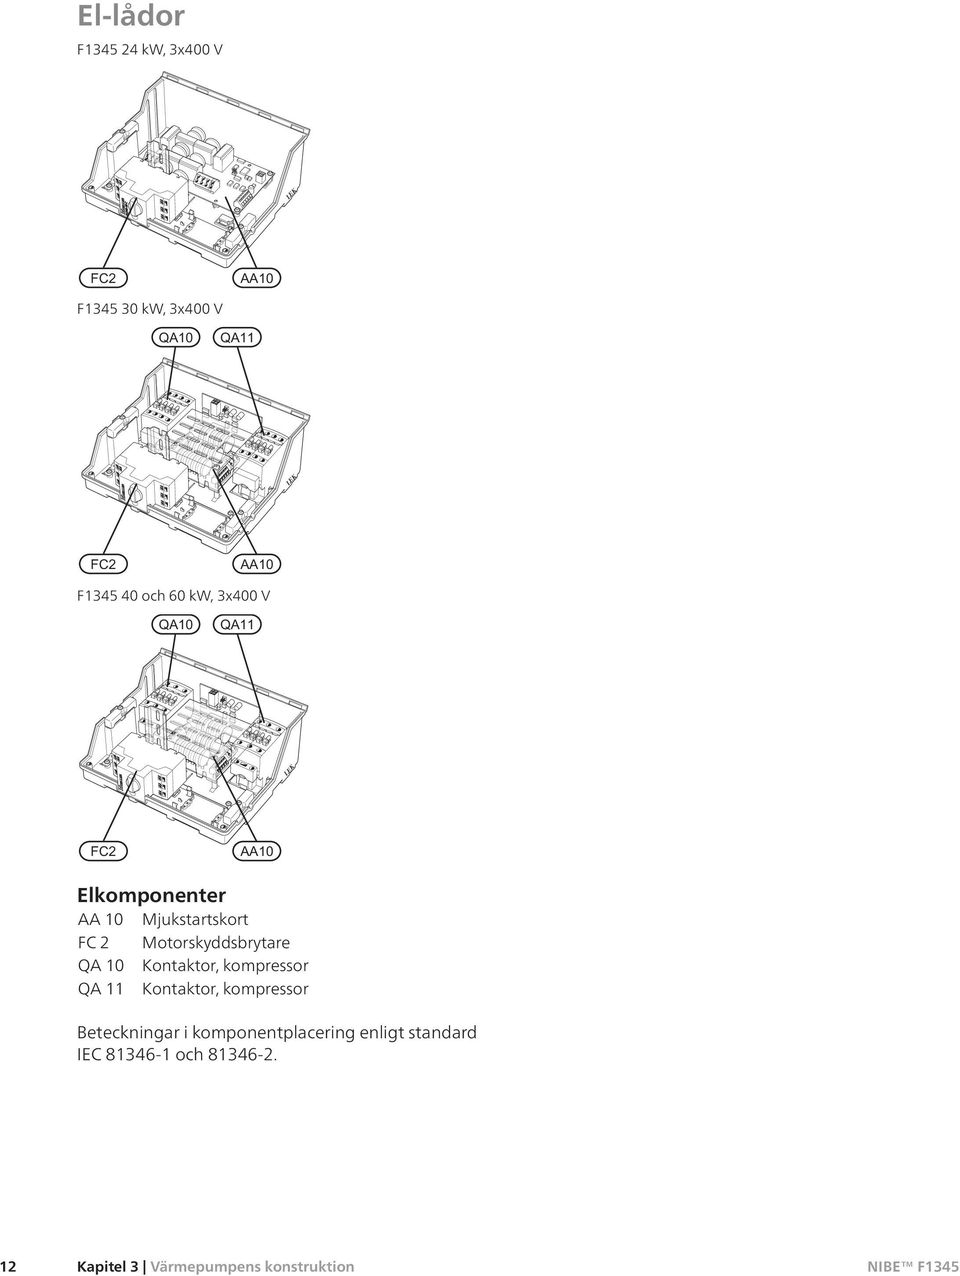 Kontaktor, kompressor QA 11 Kontaktor, kompressor Beteckningar i